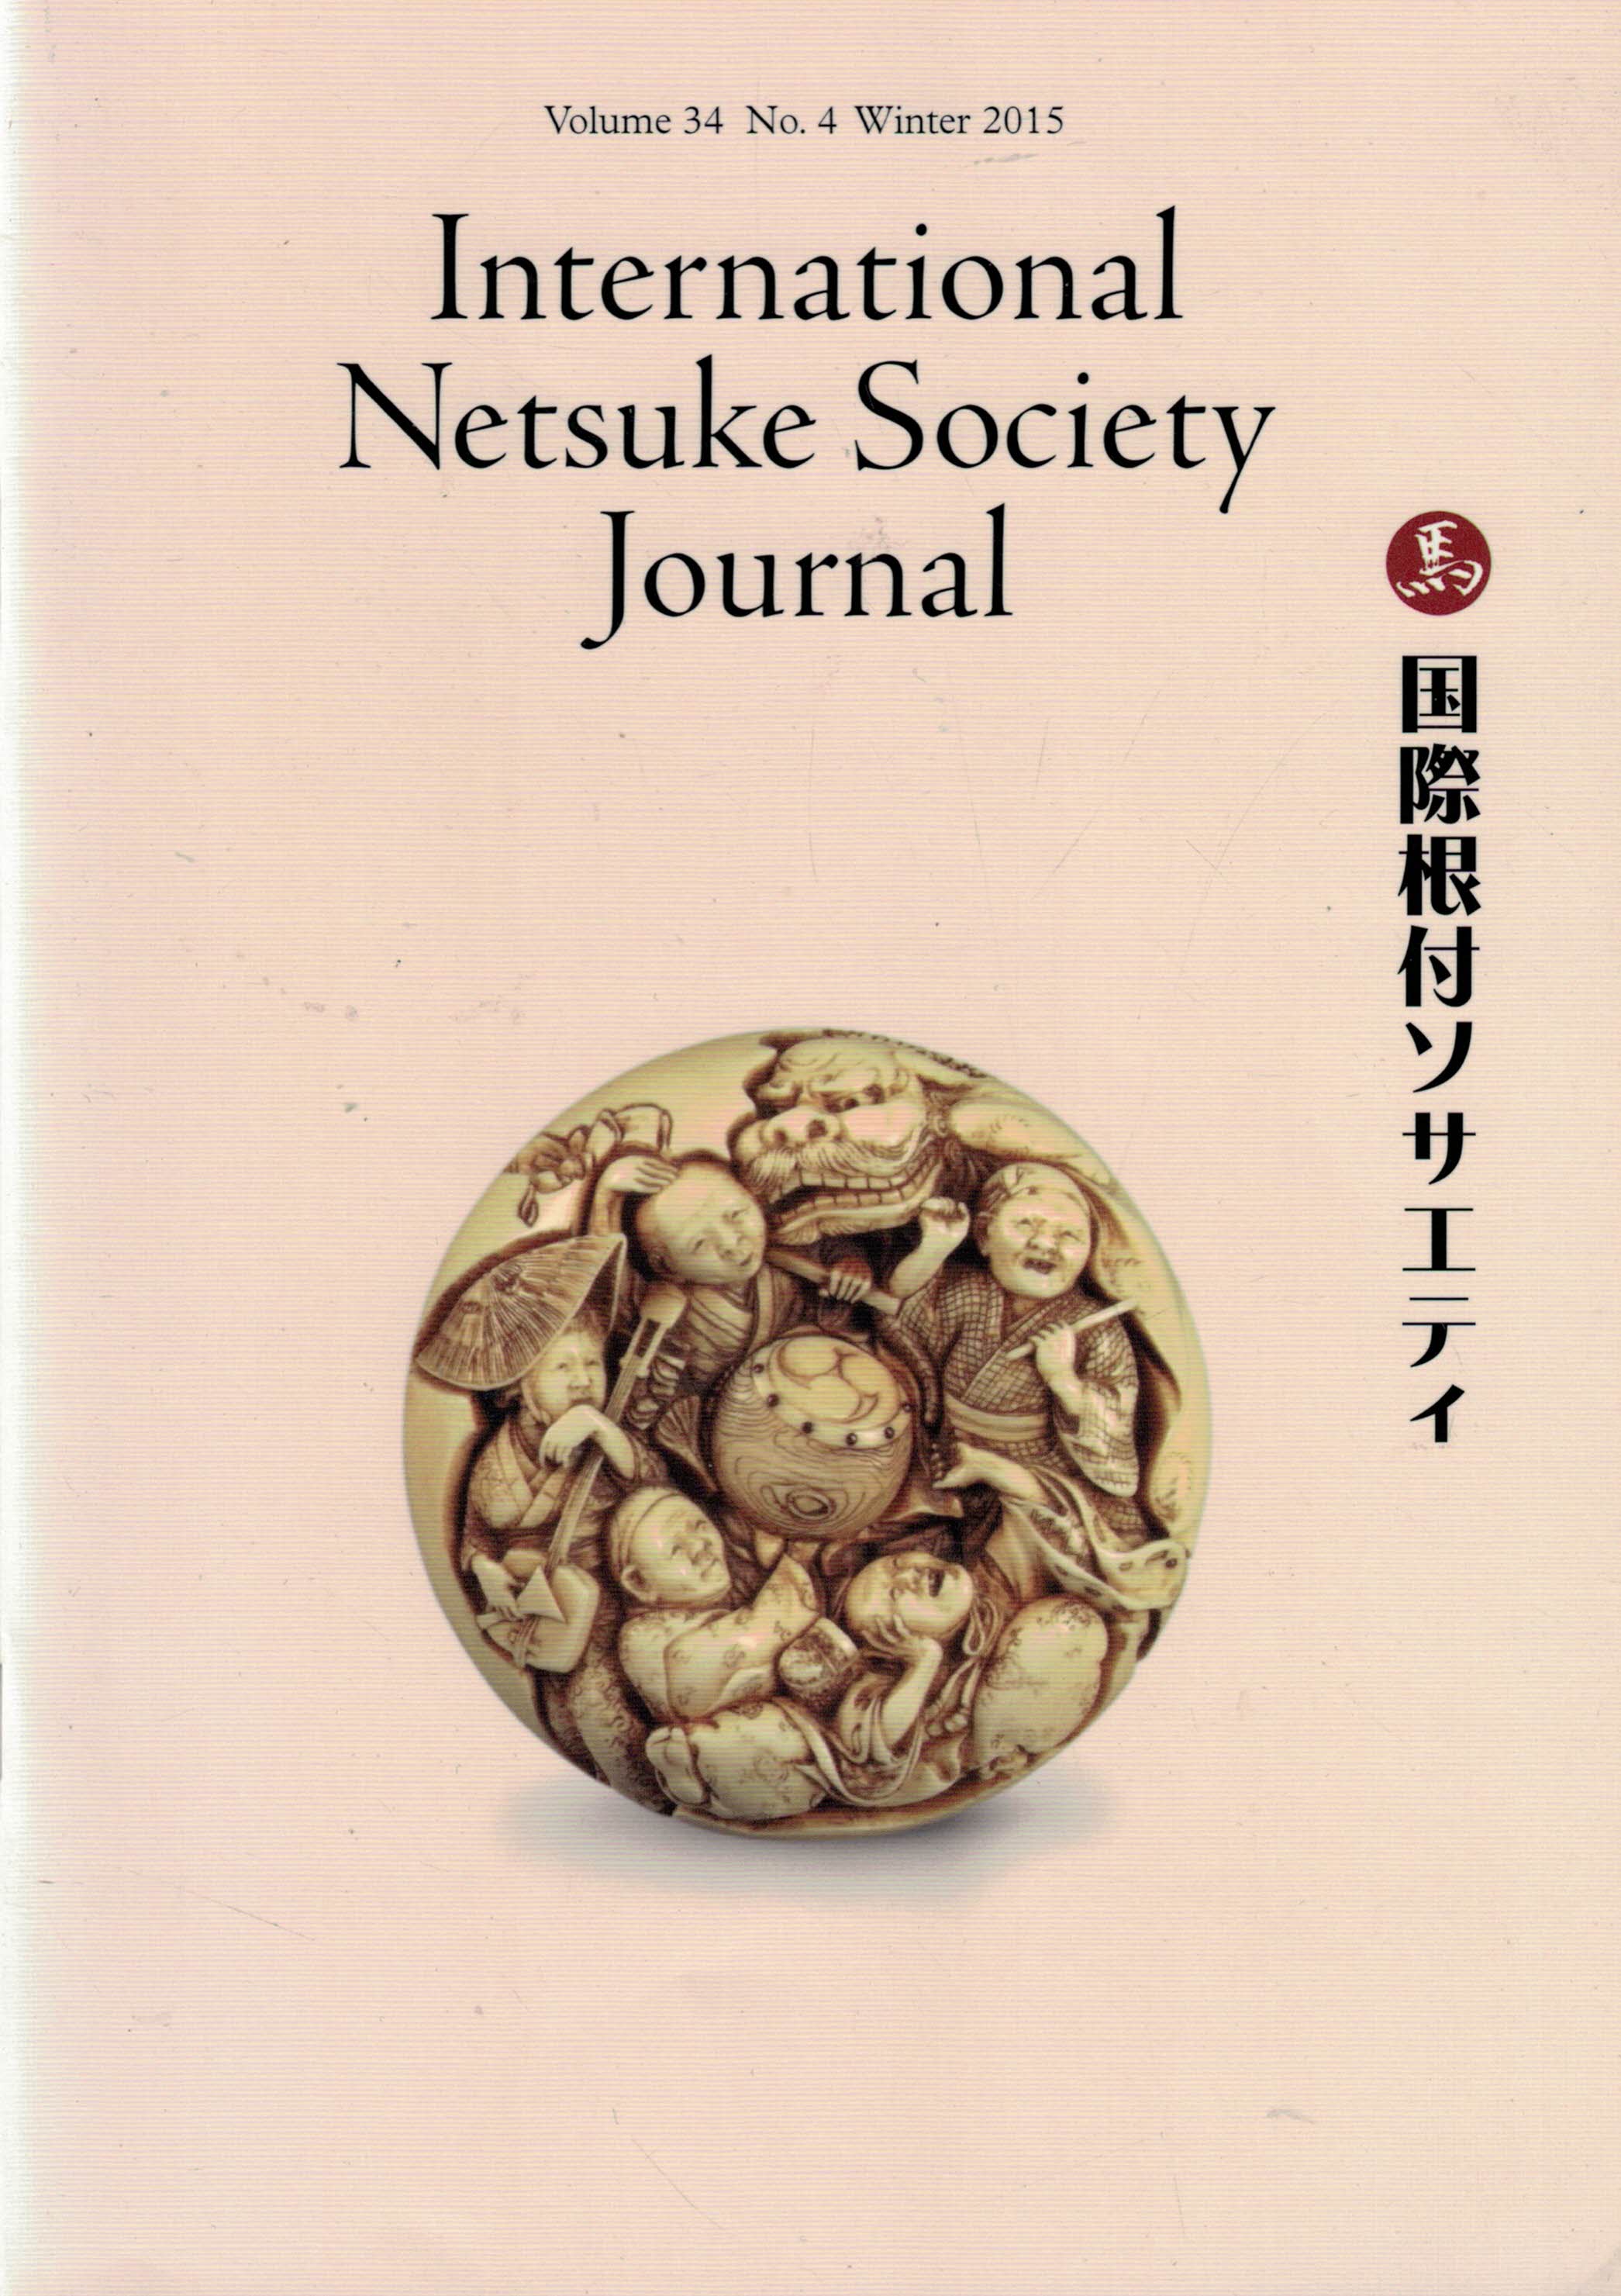 International Netsuke Society Journal. Volume 34 No. 4. Winter. 2015.